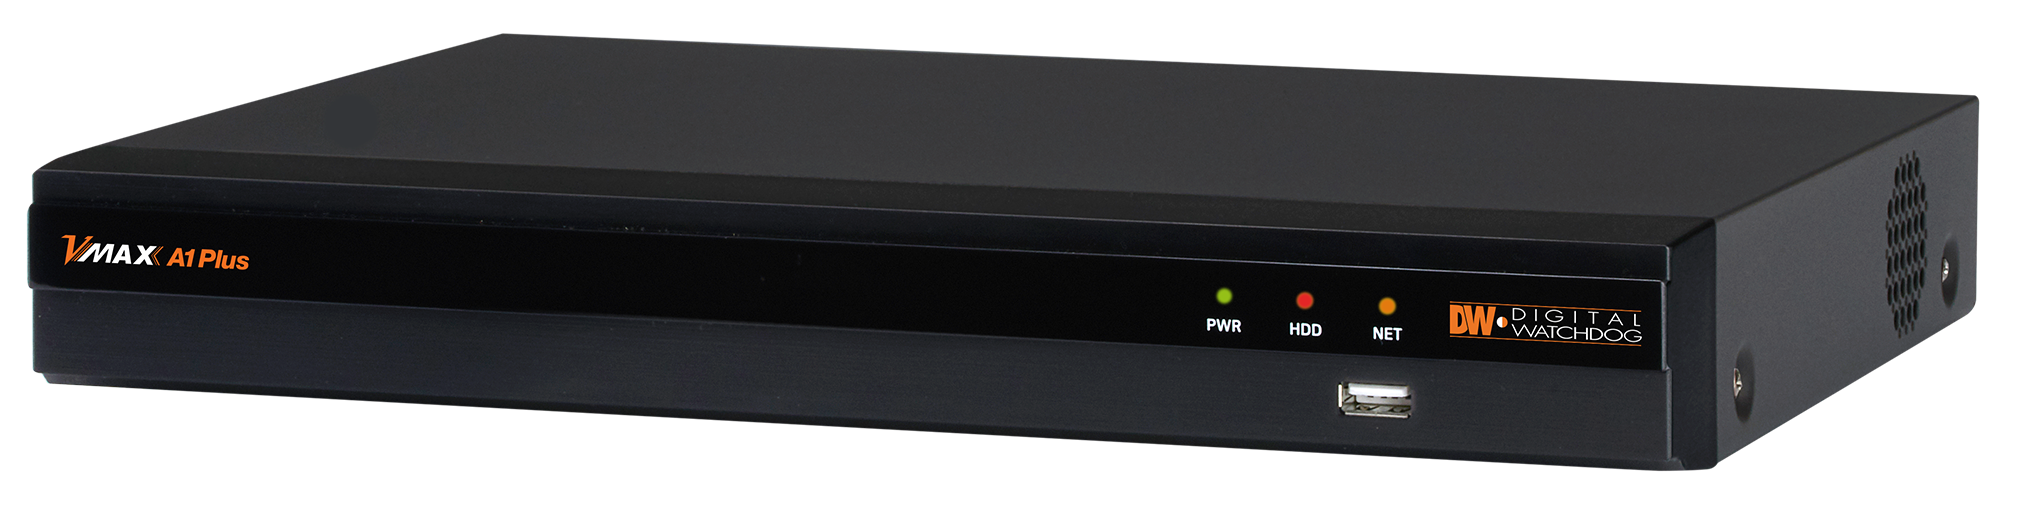 Digital Watchdog DW-VA1P48T  UHDoC - DVR 4ch 4 Channel Universal HD Over Coax DVR